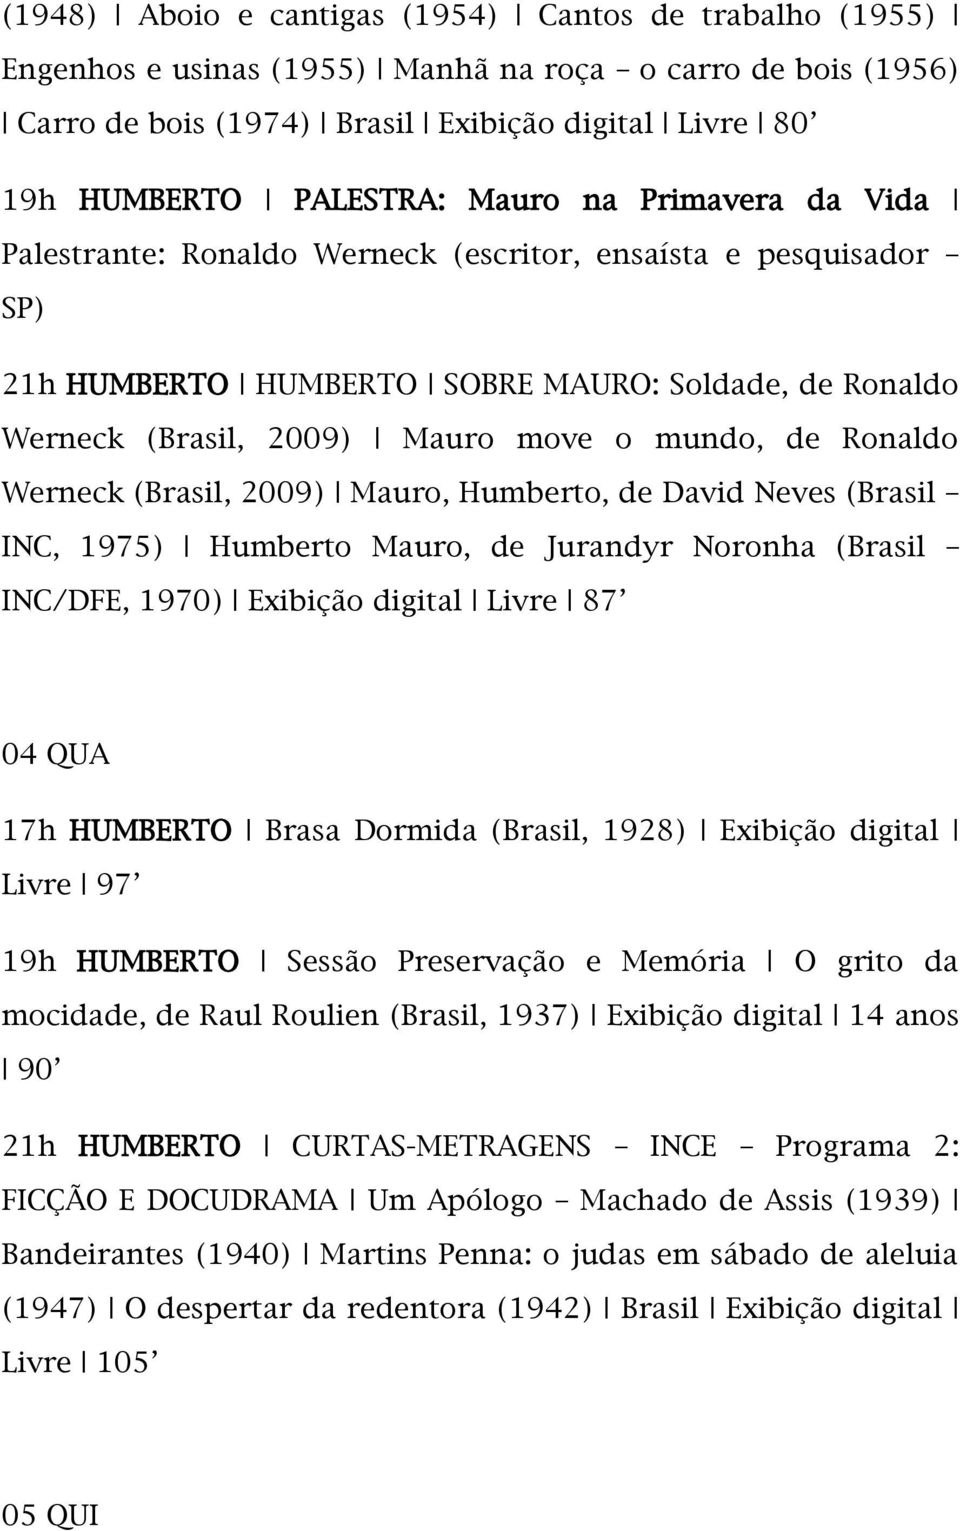 Ronaldo Werneck (Brasil, 2009) Mauro, Humberto, de David Neves (Brasil INC, 1975) Humberto Mauro, de Jurandyr Noronha (Brasil INC/DFE, 1970) Exibição digital Livre 87 04 QUA 17h HUMBERTO Brasa